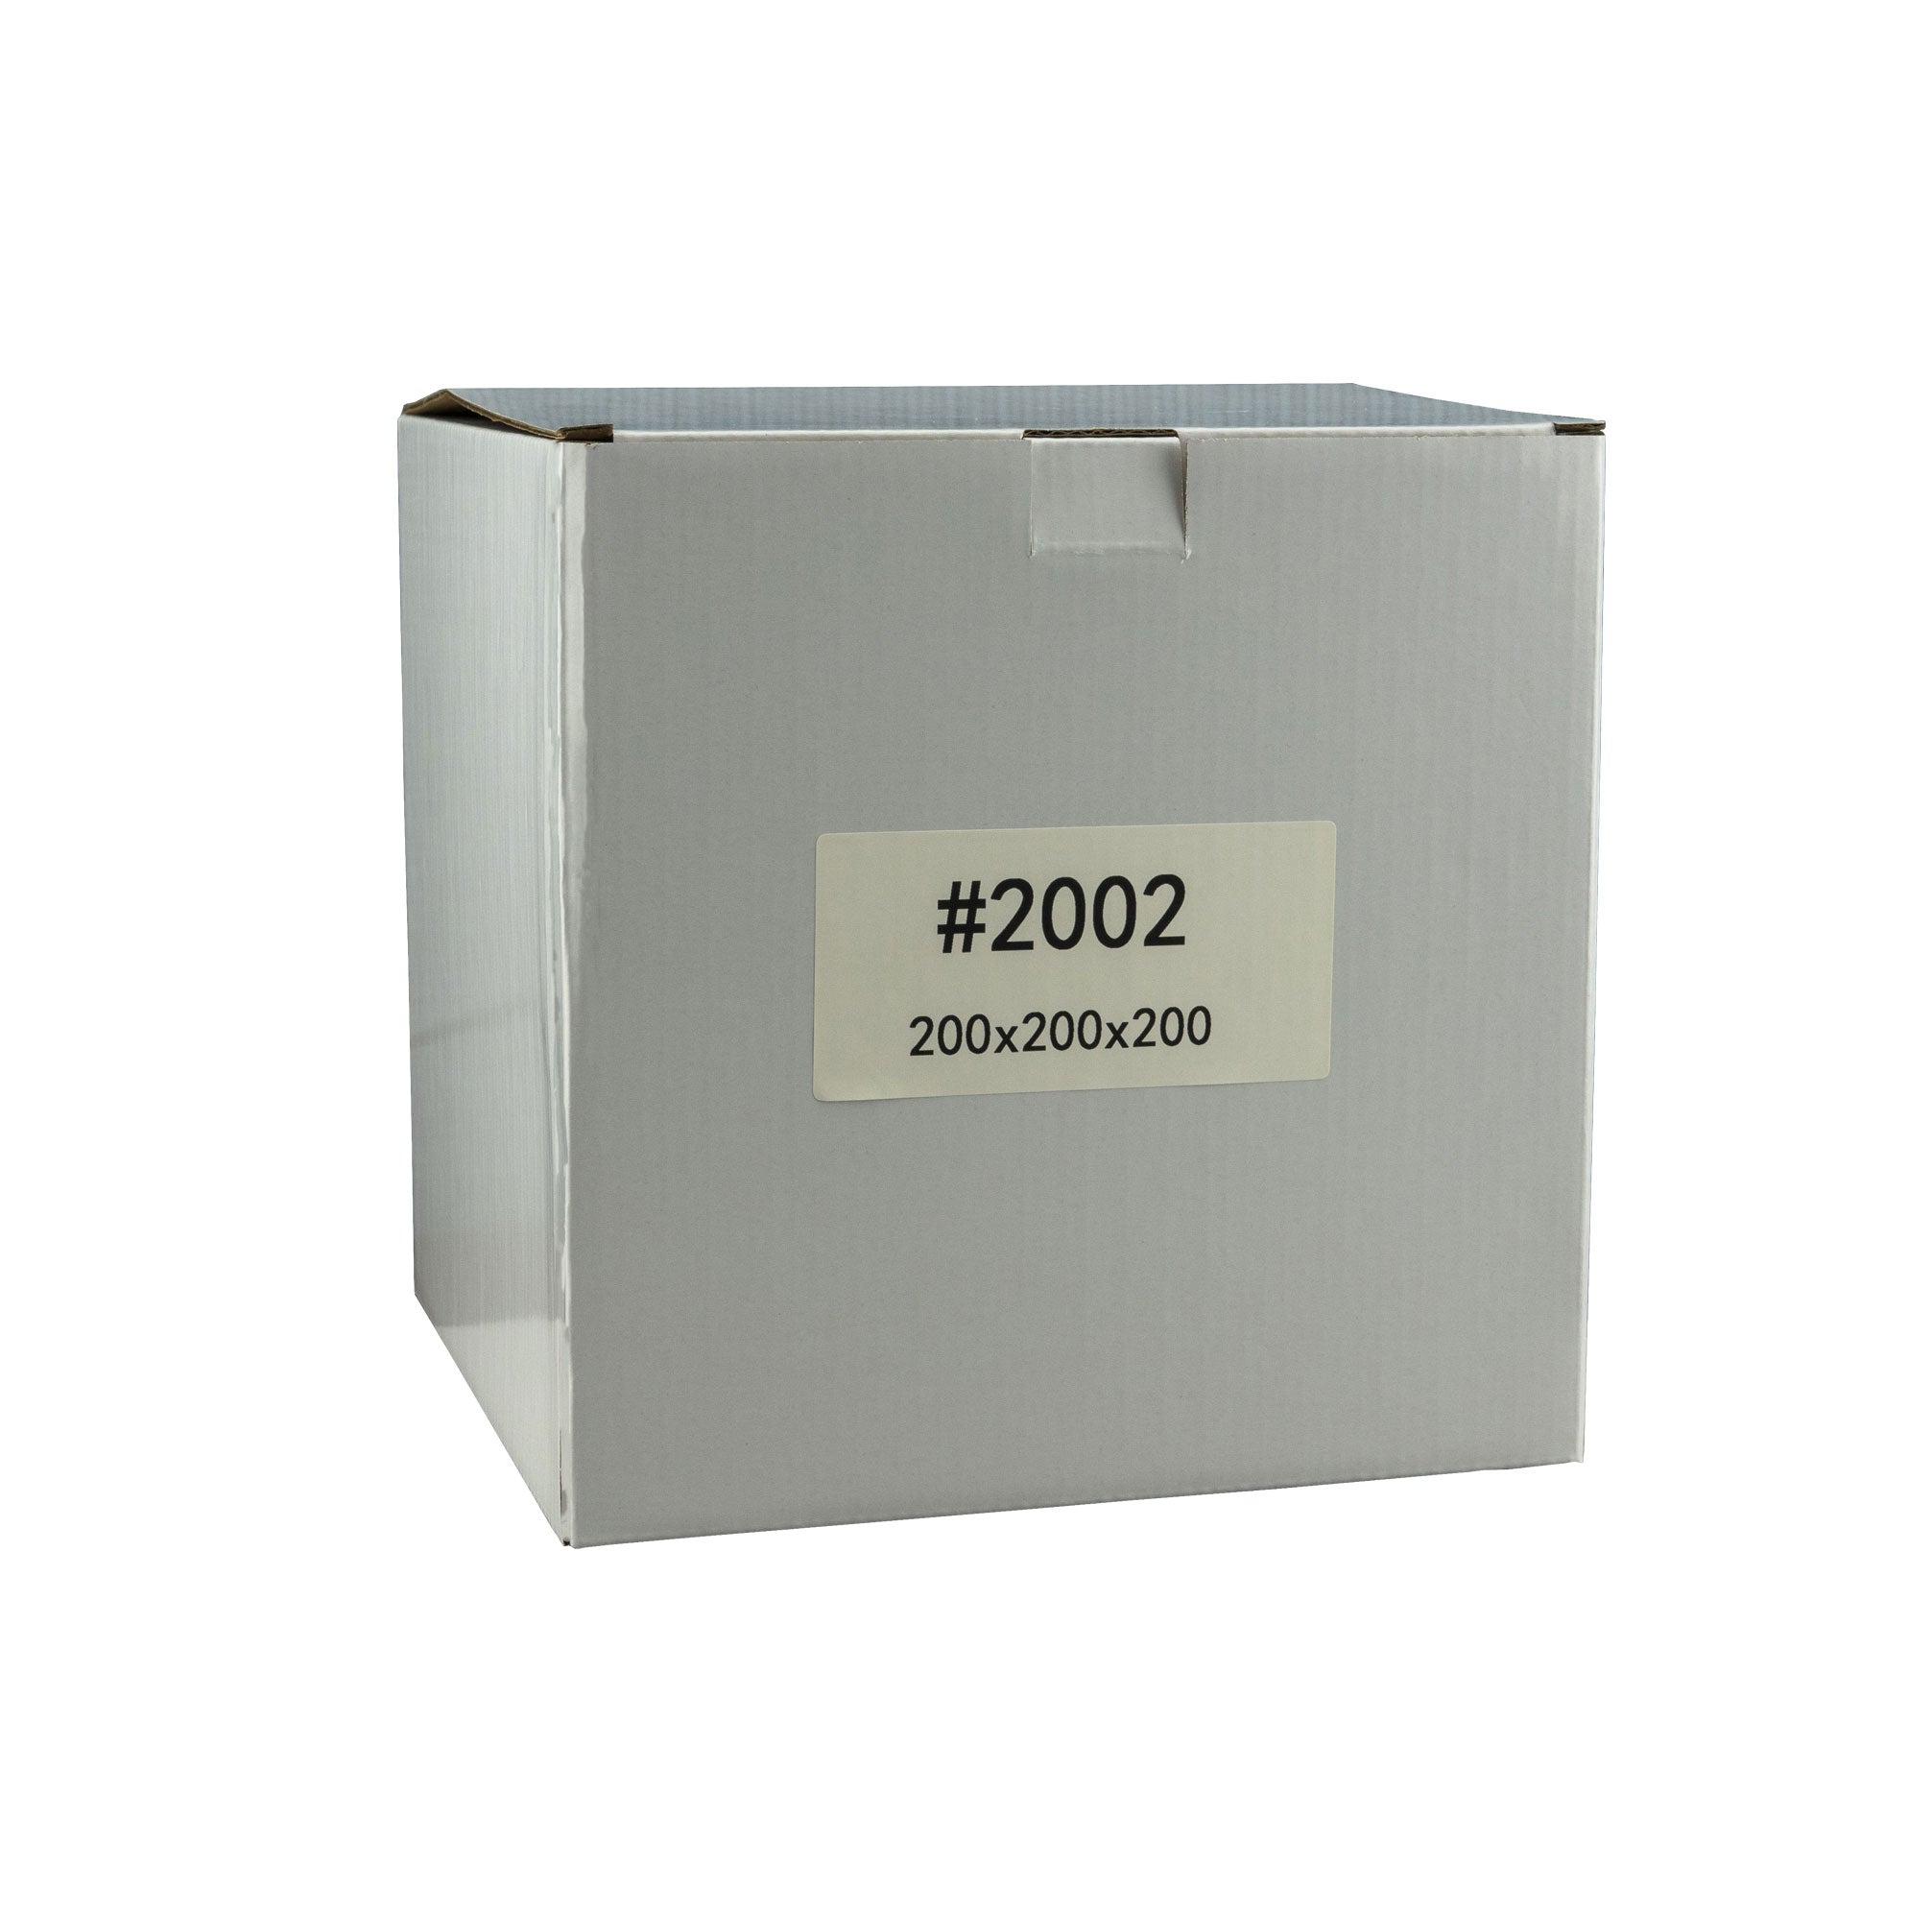 200mm x 200mm x 200mm White Carton Cardboard Shipping Box (#2002)